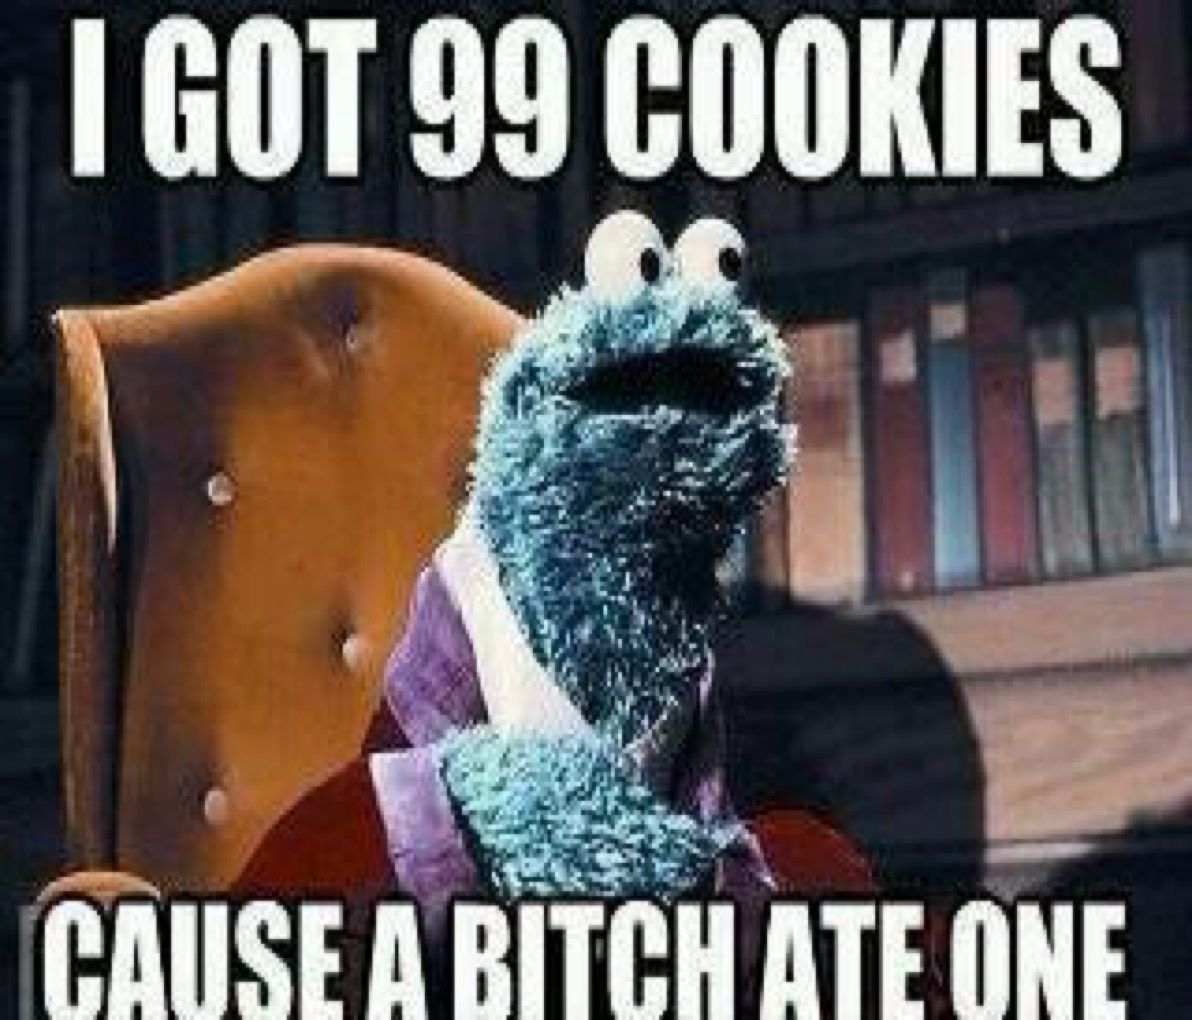 cookie monster,sesame street,GreyJedi,meme,memes,gifs,funny,pictures,pics,g...